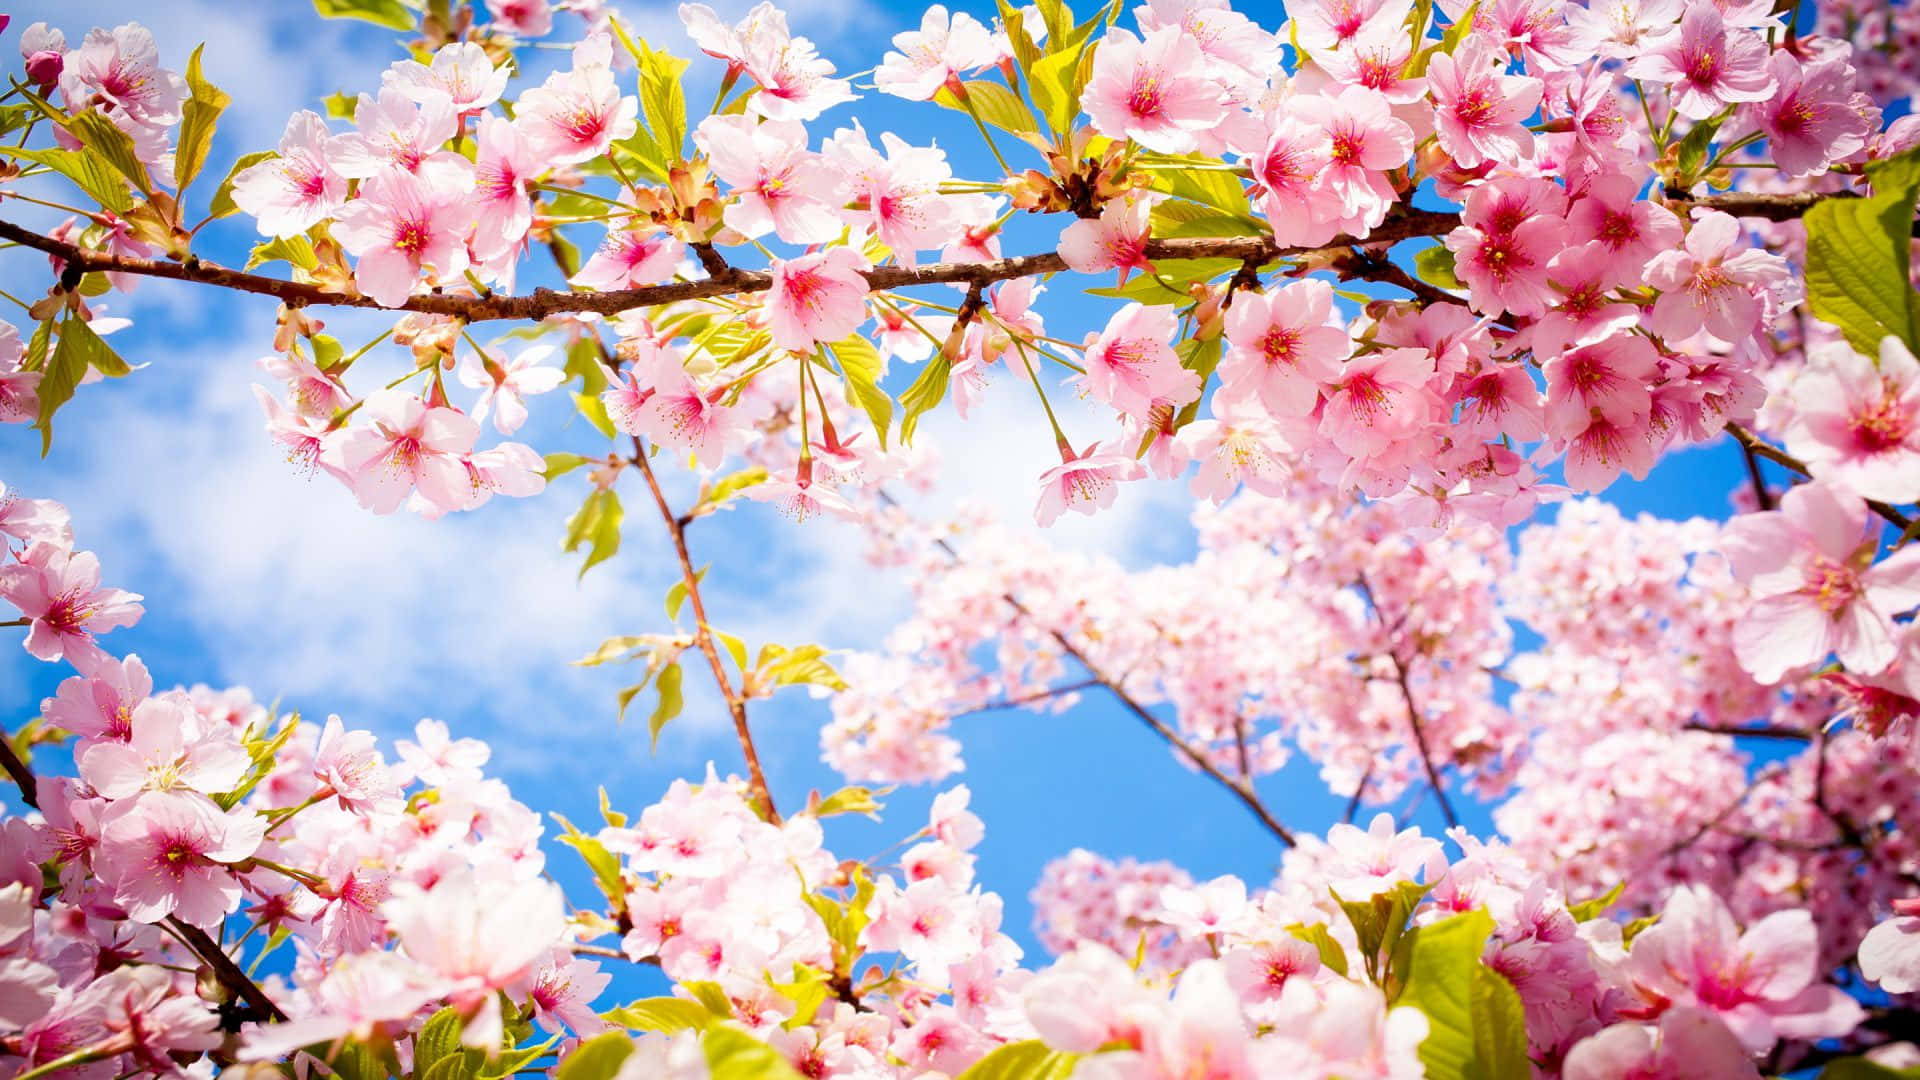 Free Cherry Blossom Tree Wallpaper Downloads, Cherry Blossom Tree Wallpaper for FREE